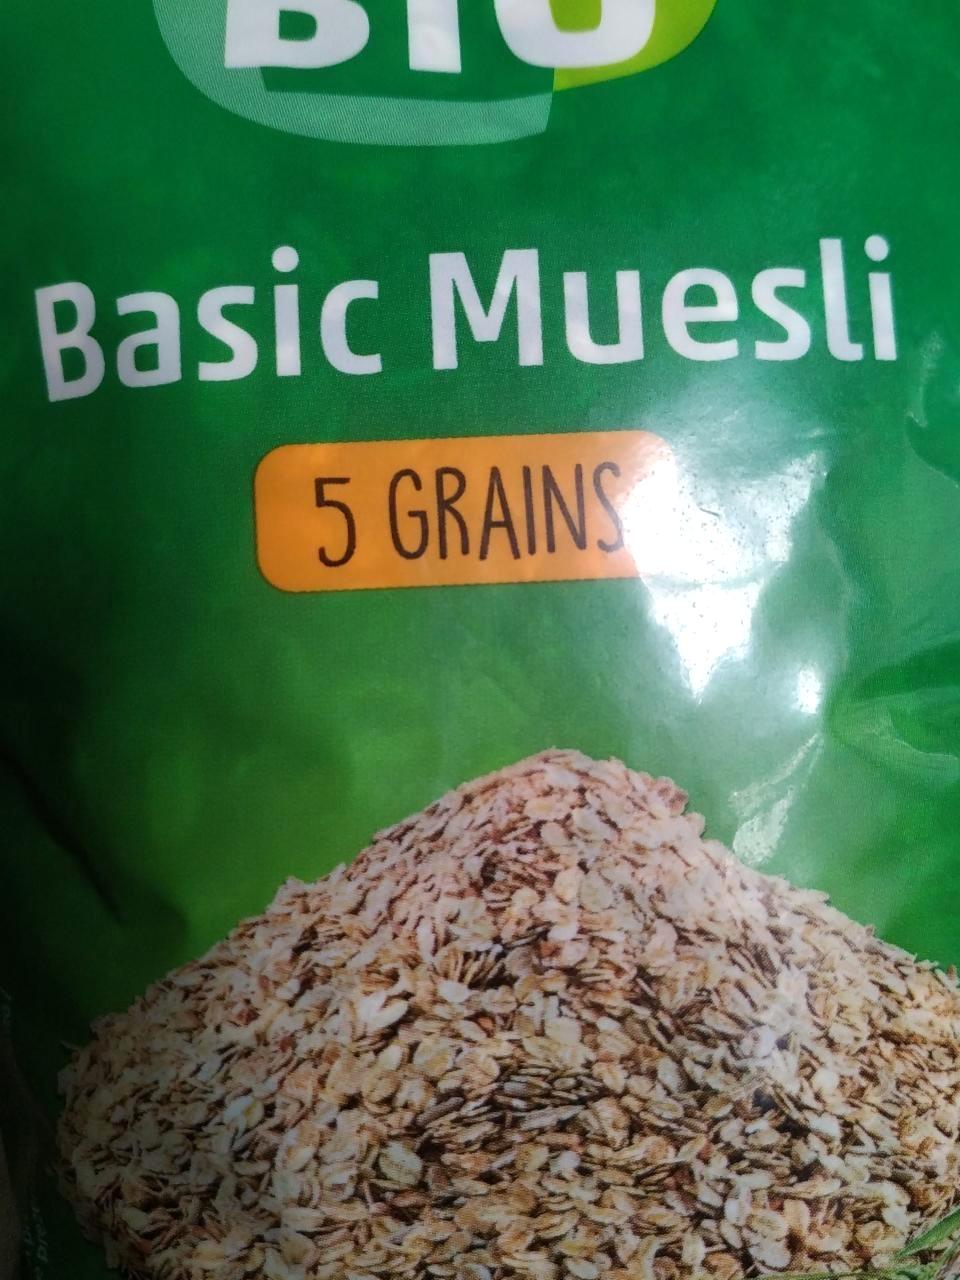 Képek - Basic müzlialap 5 grains Bio